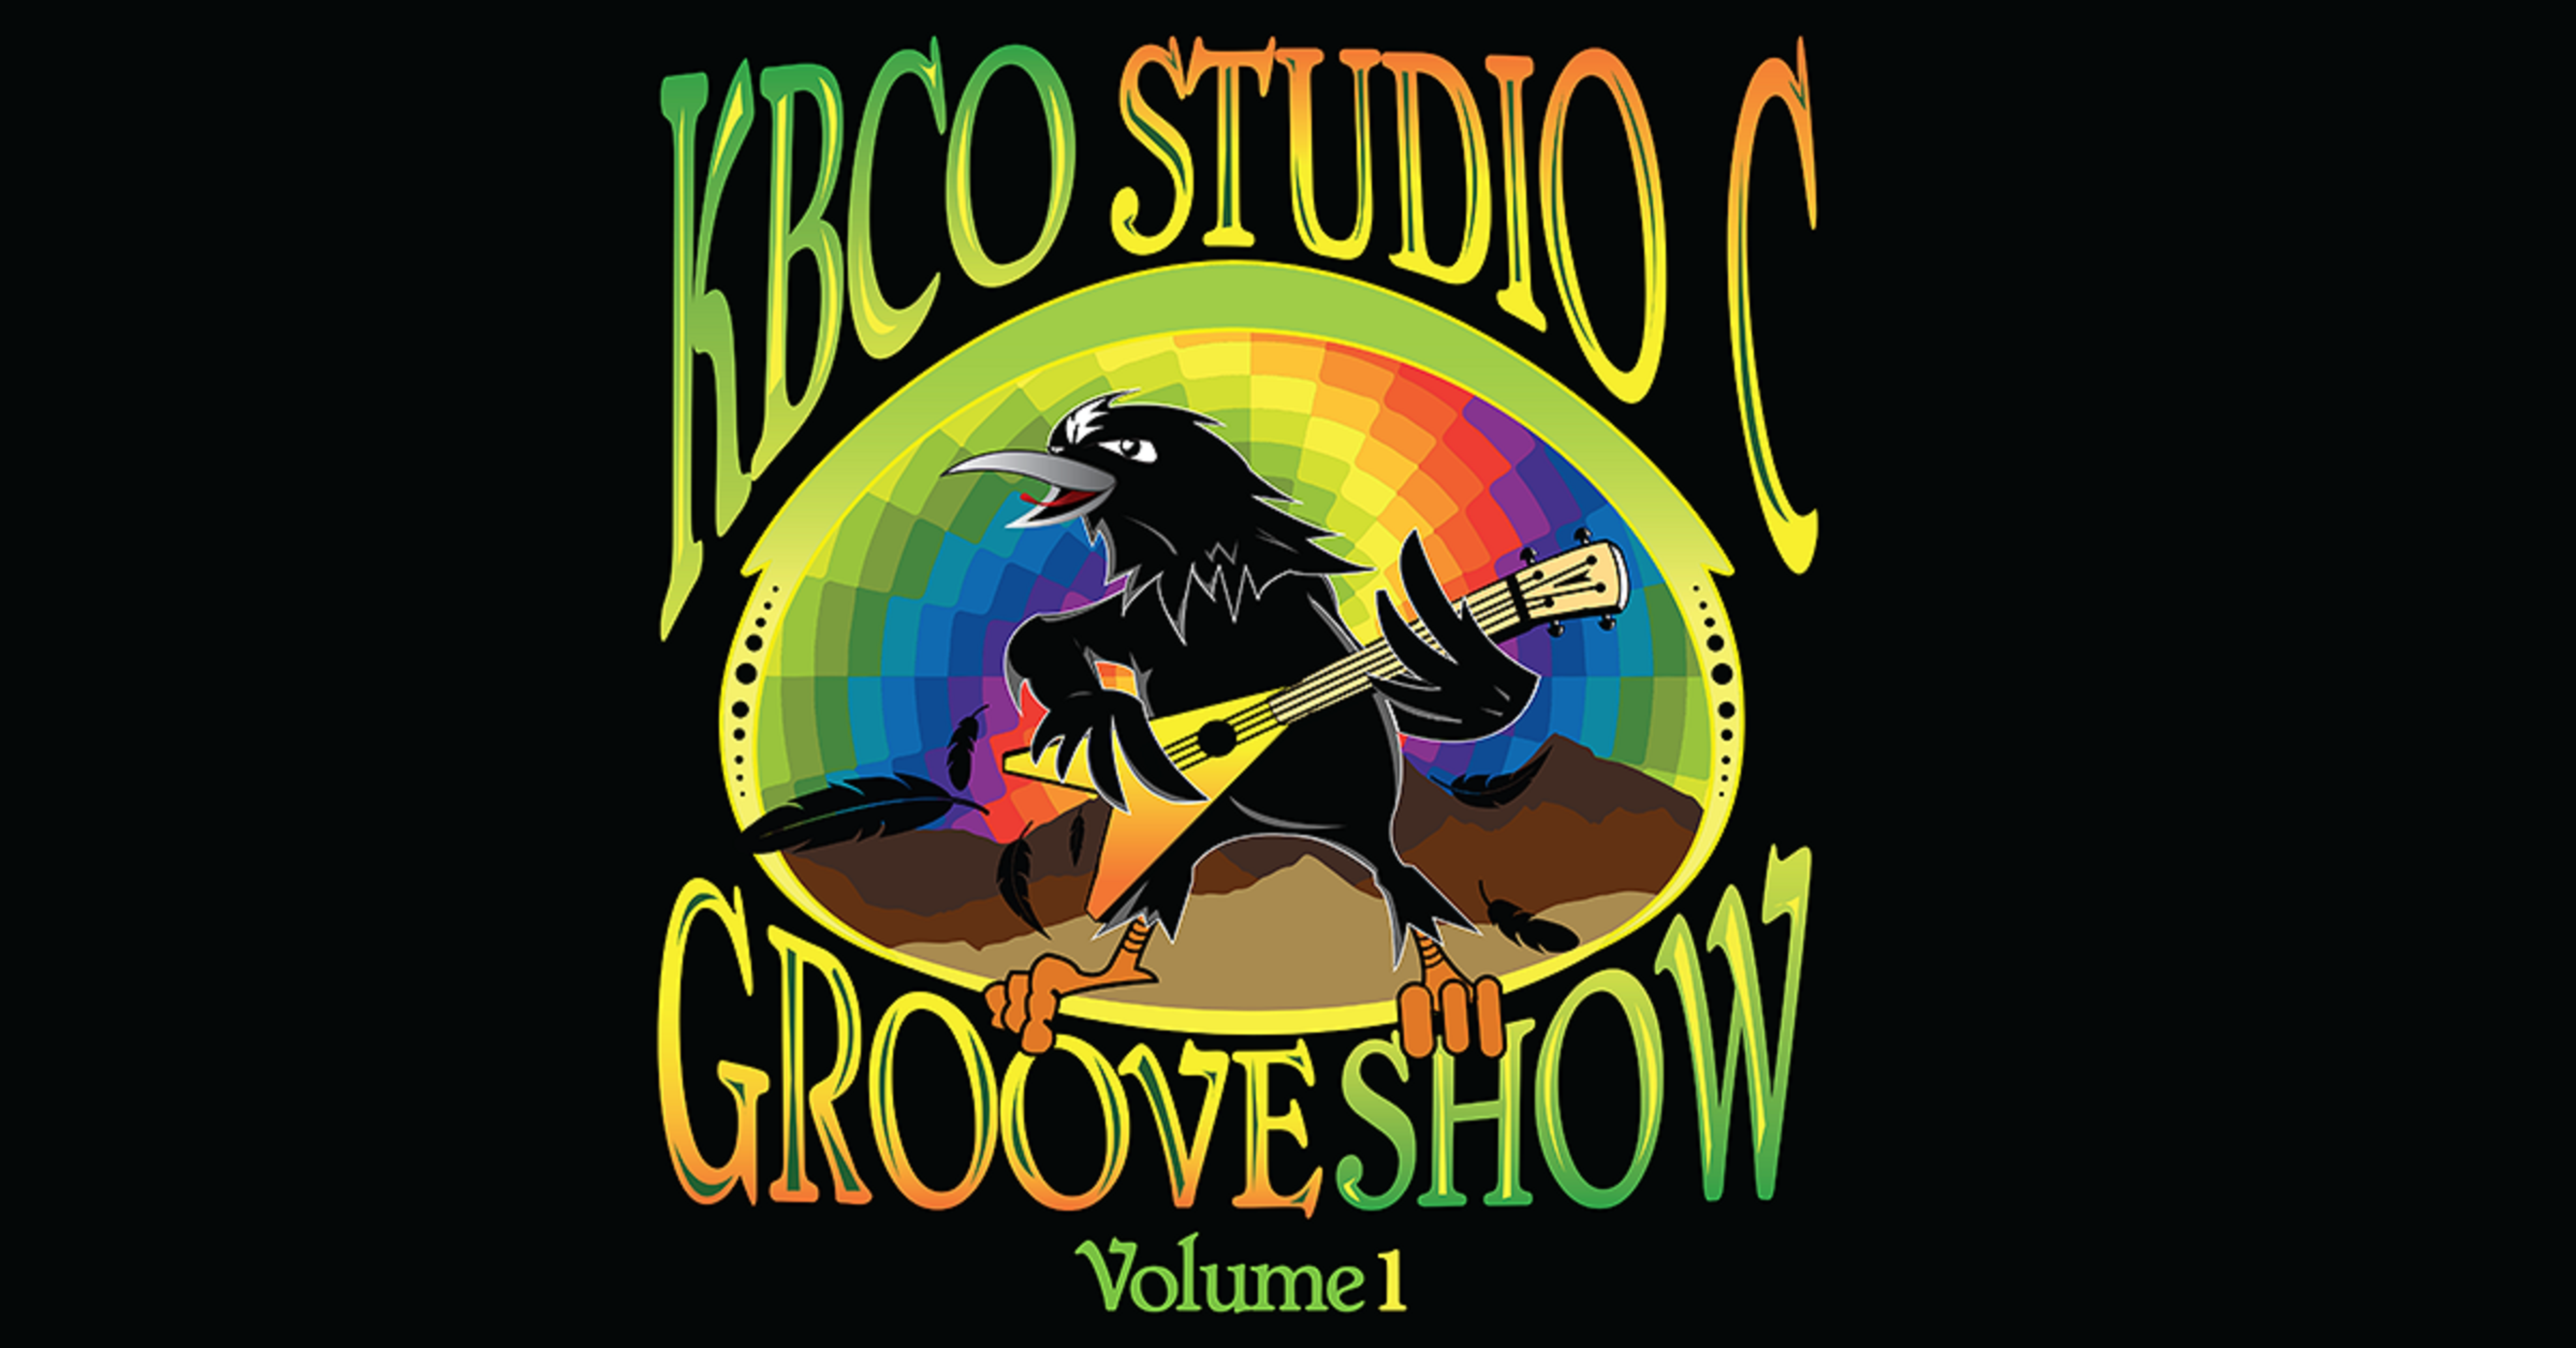 KBCO Studio C Groove Show Volume 1 on Vinyl